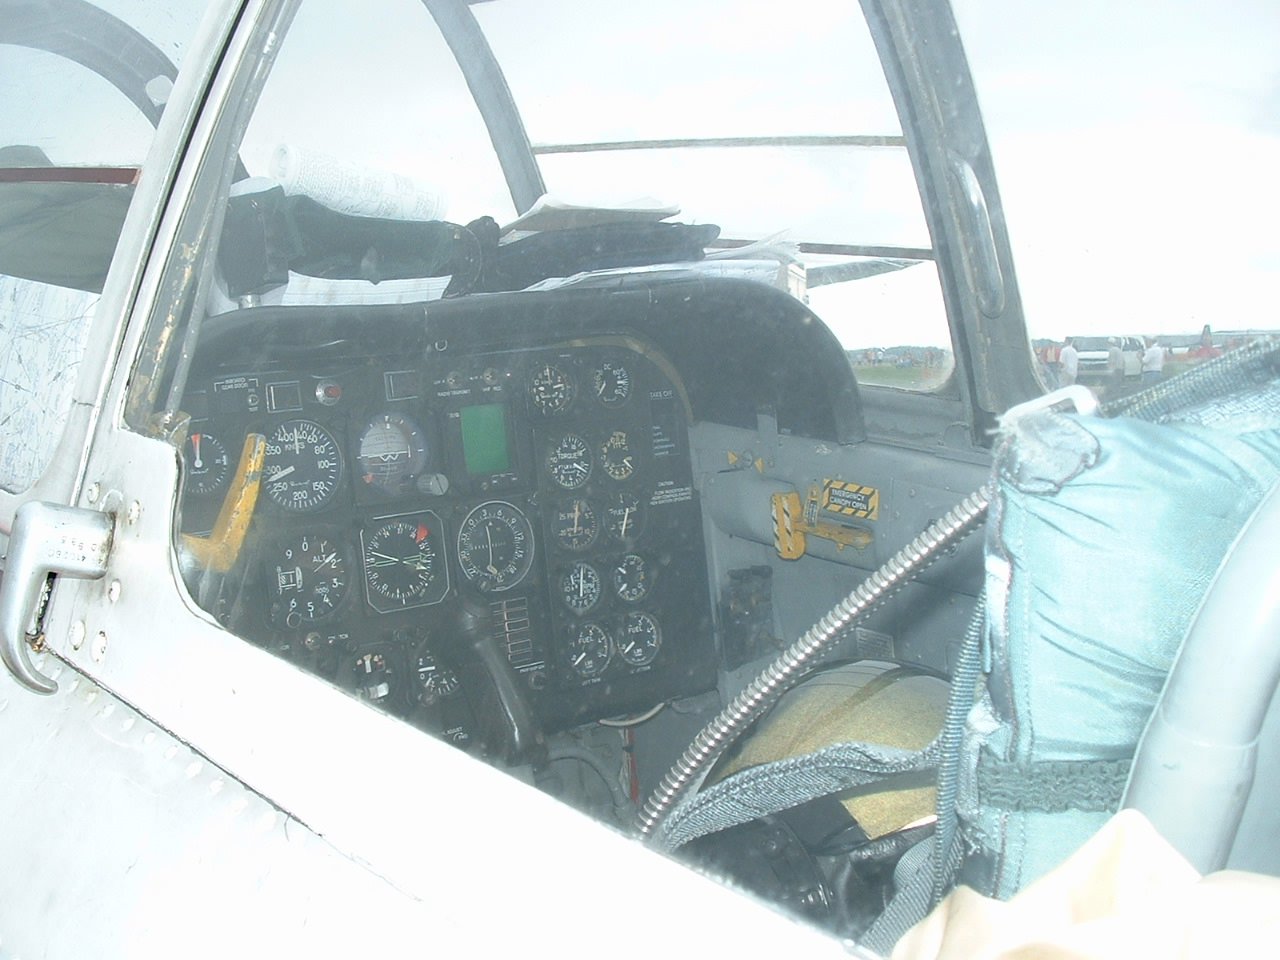 [t-34cmentorcockpit.jpg]